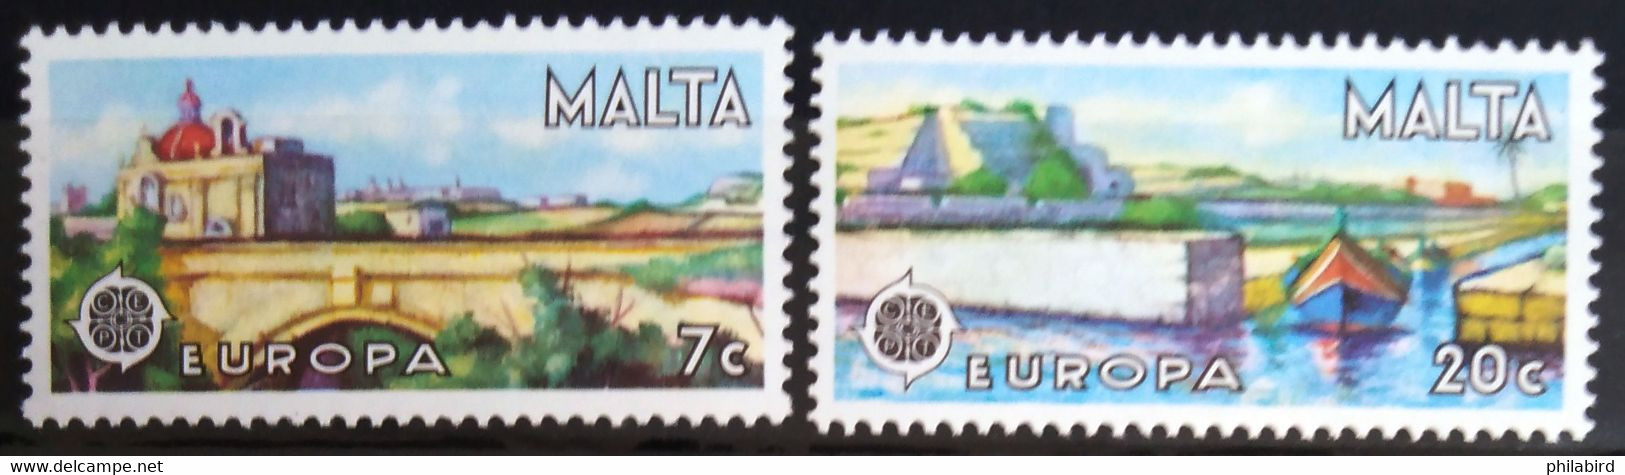 EUROPA 1977 - MALTE                    N° 549/550                        NEUF** - 1977